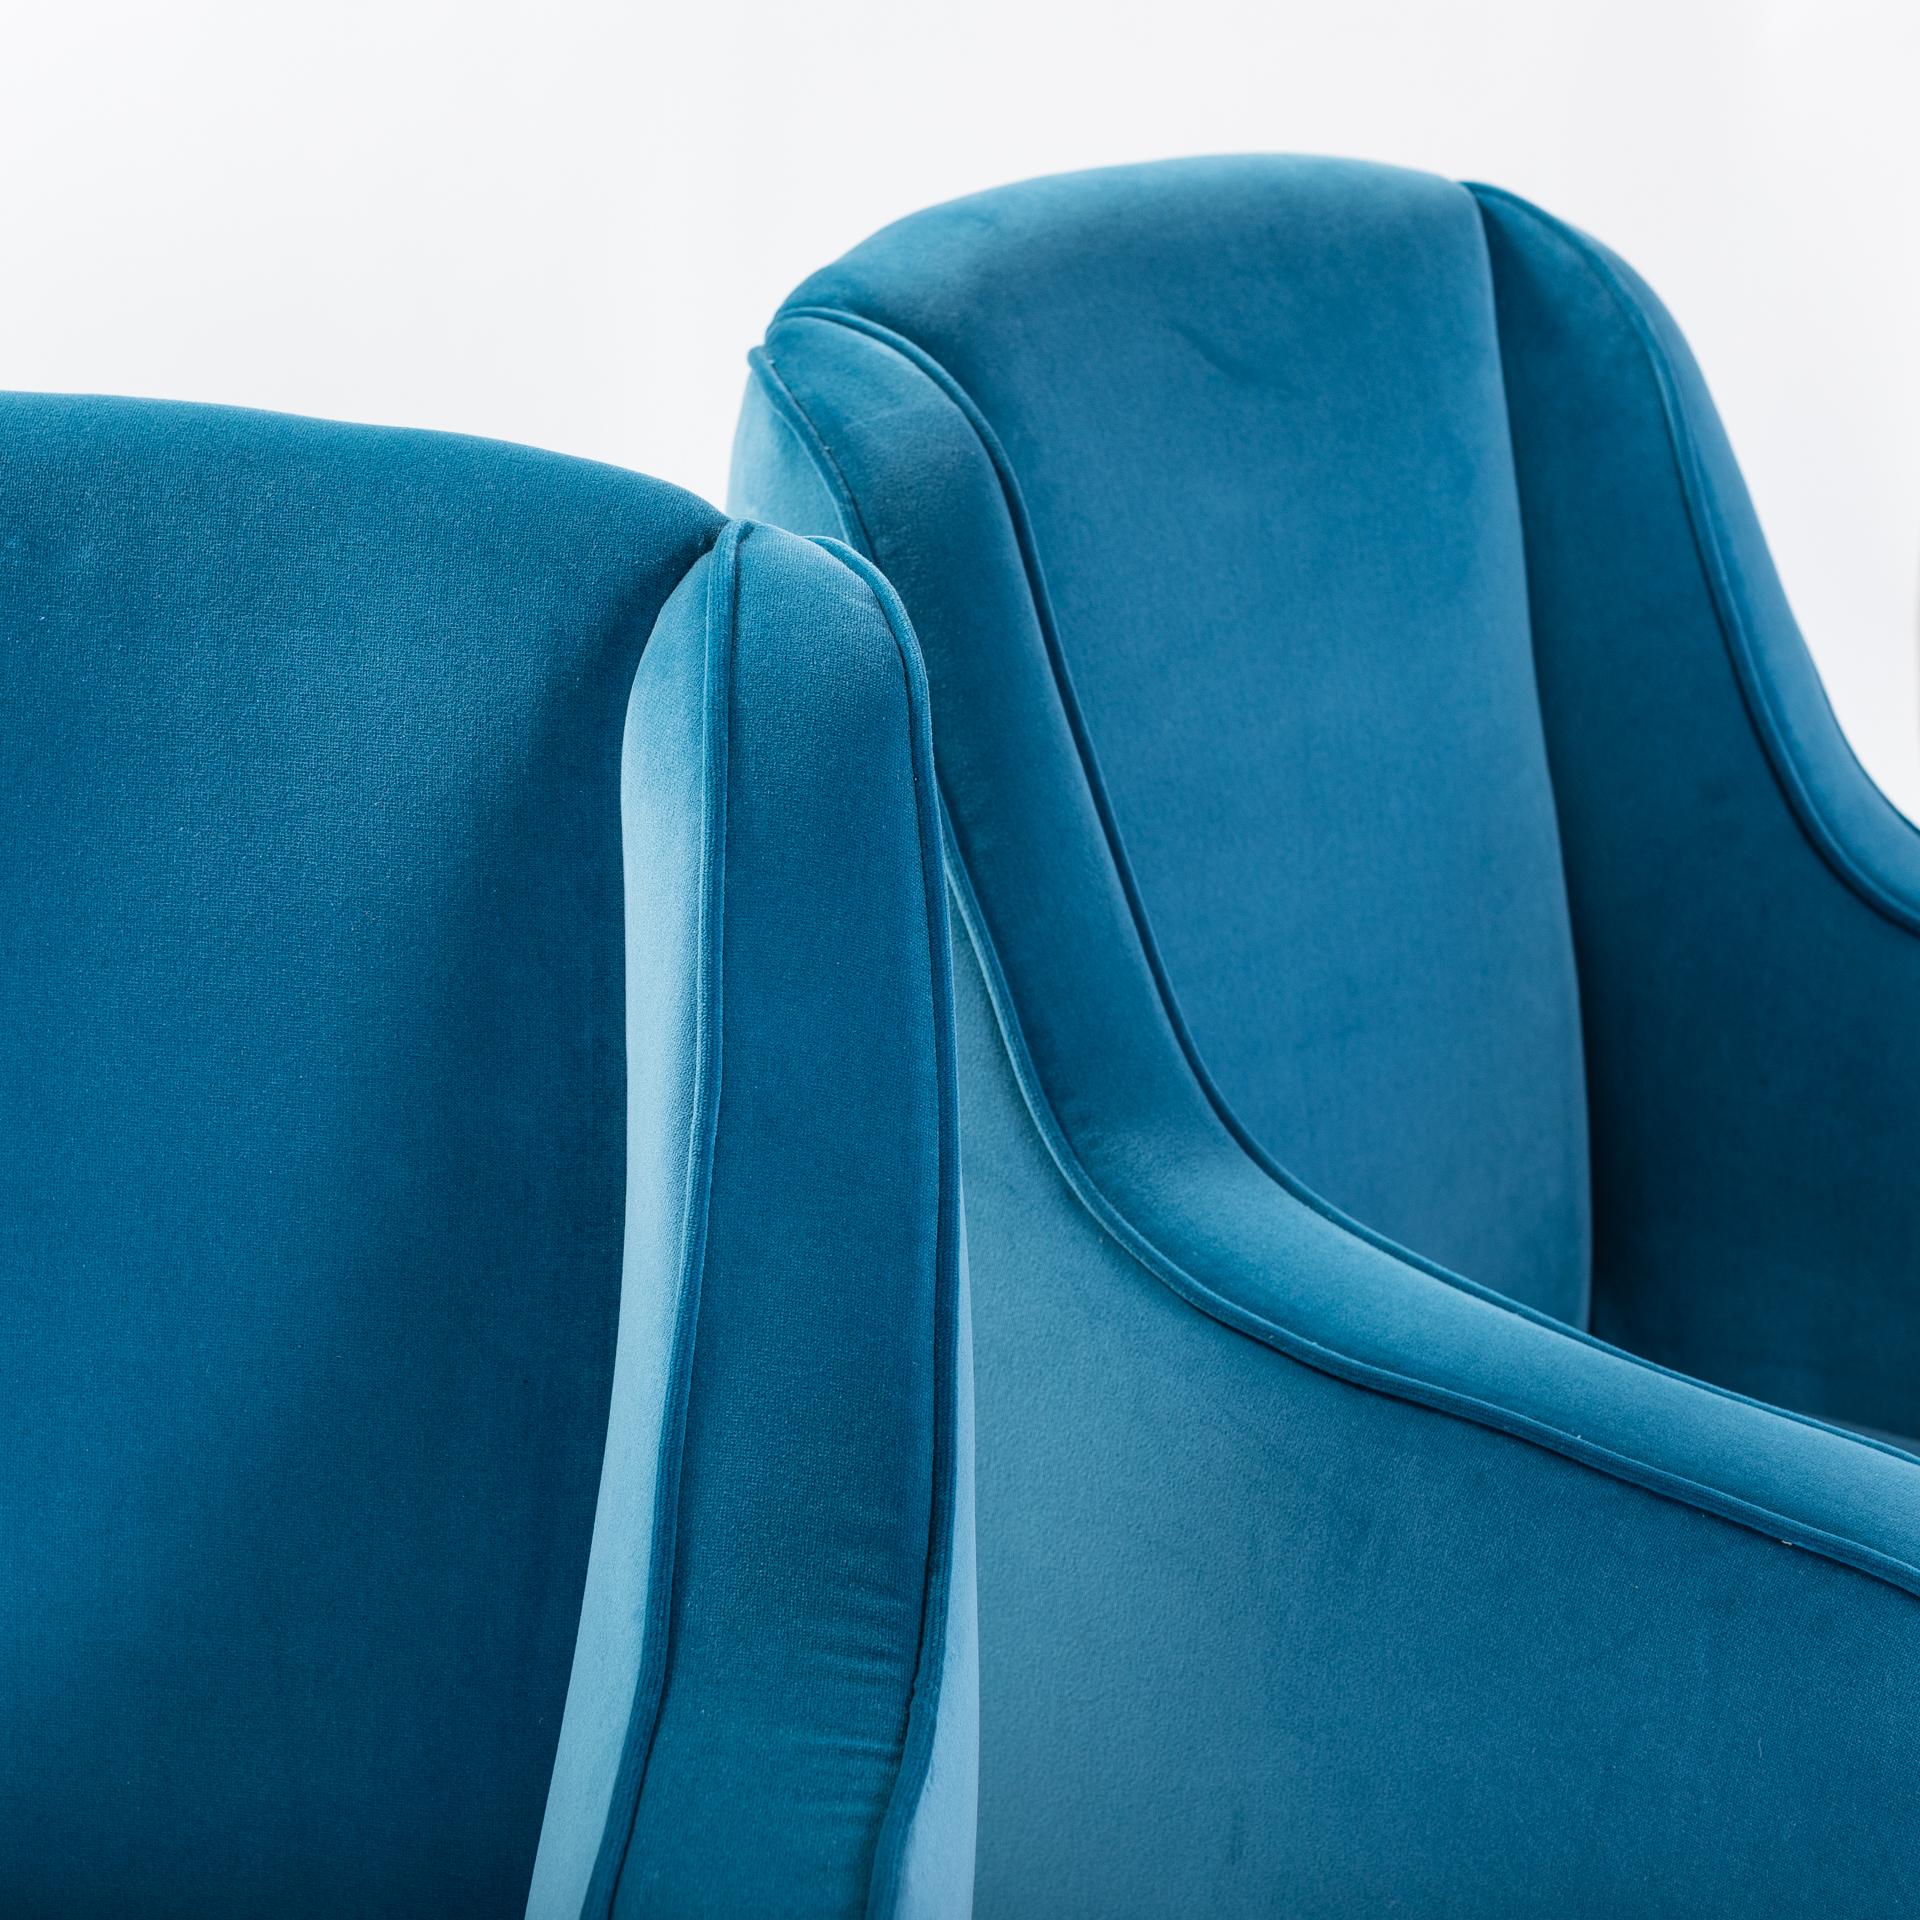 Bronze Pair of Italian Midcentury Armchairs Re-Upholsterd in Turquoise Colored Velvet